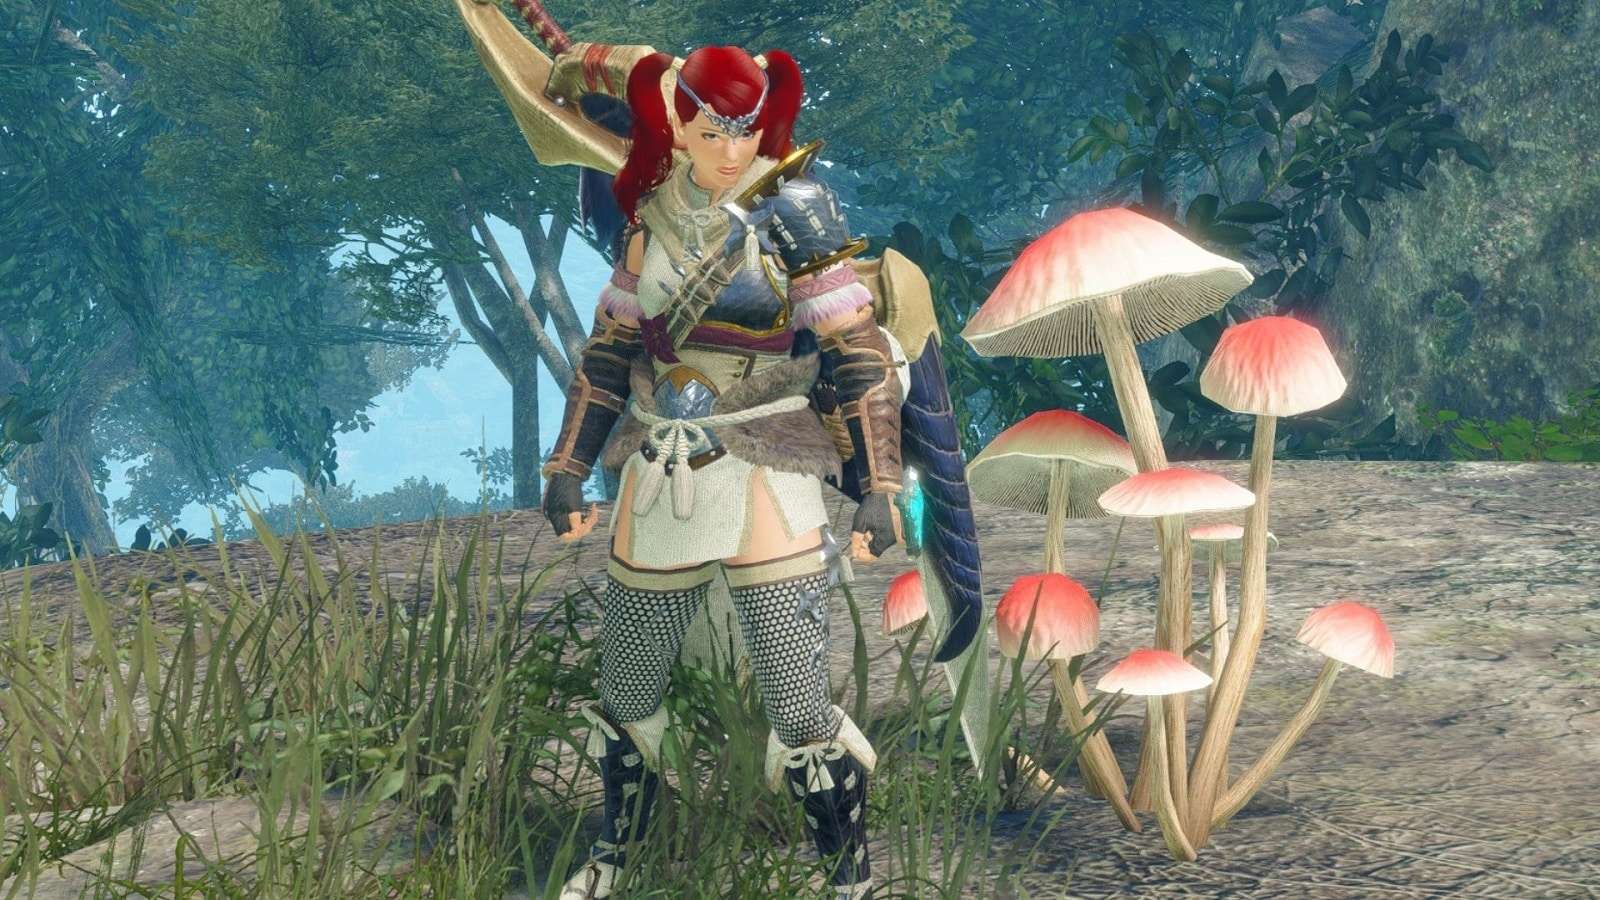 Hunter standing next to a Prized Mushroom